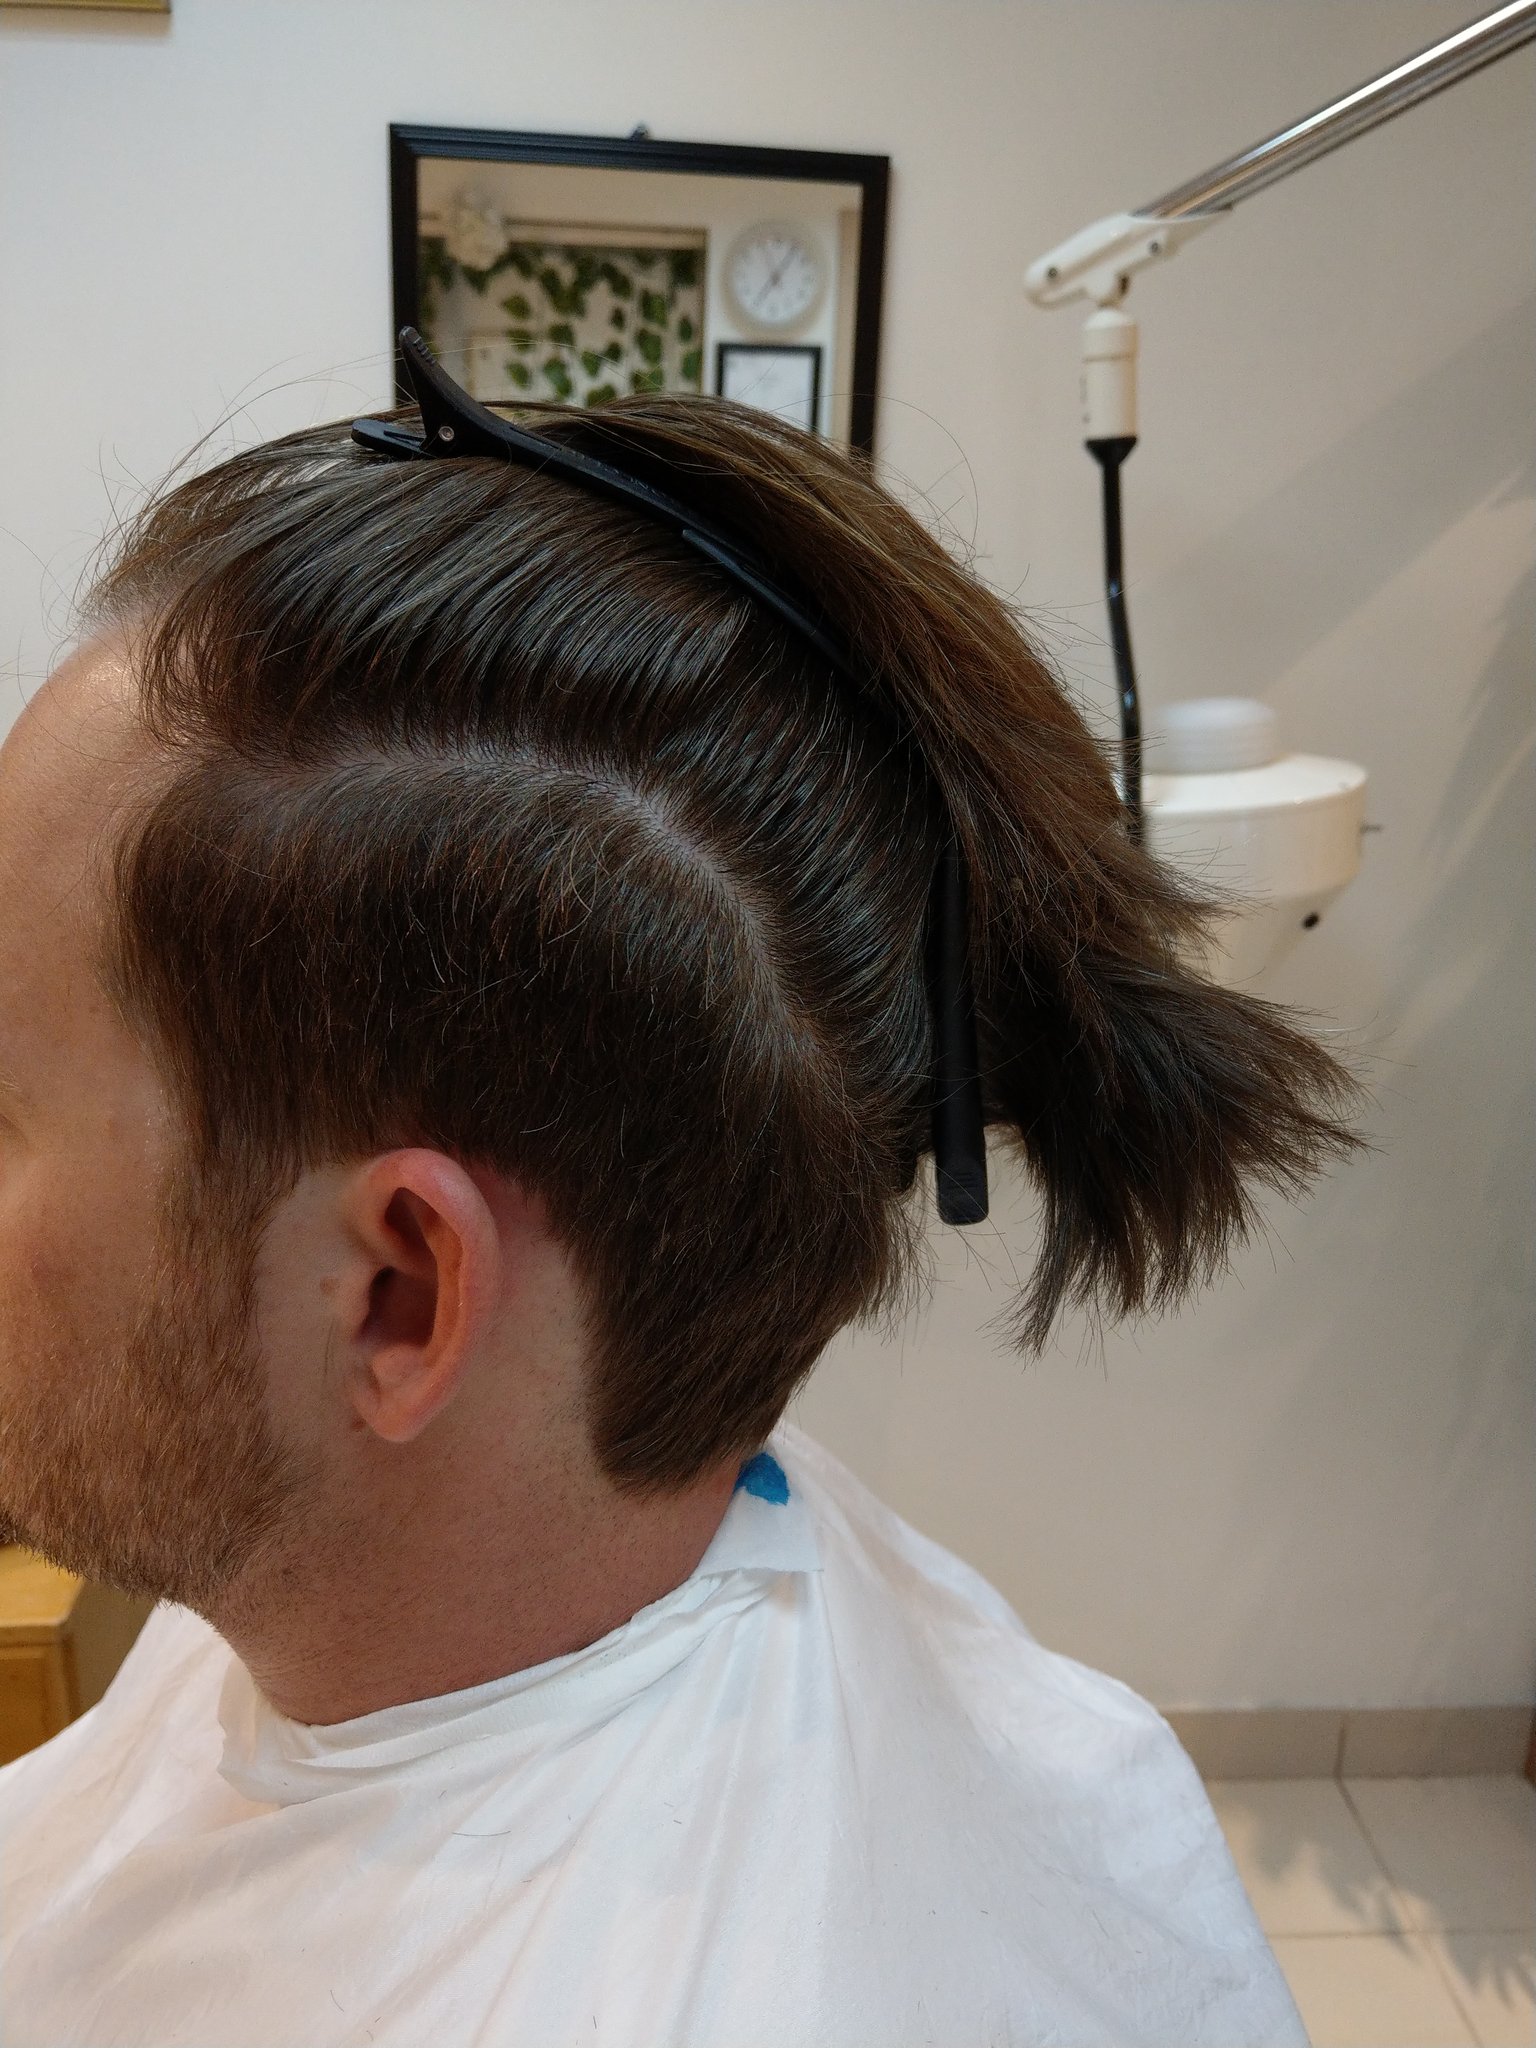 Men s Haircut Near Me ص ا ل و ن_ح ل ا ق هوليدي on X: "💈Barber shop ✂ barbers near me best hair  salon for men best hair color salon near me coiffeur cuthair best hair